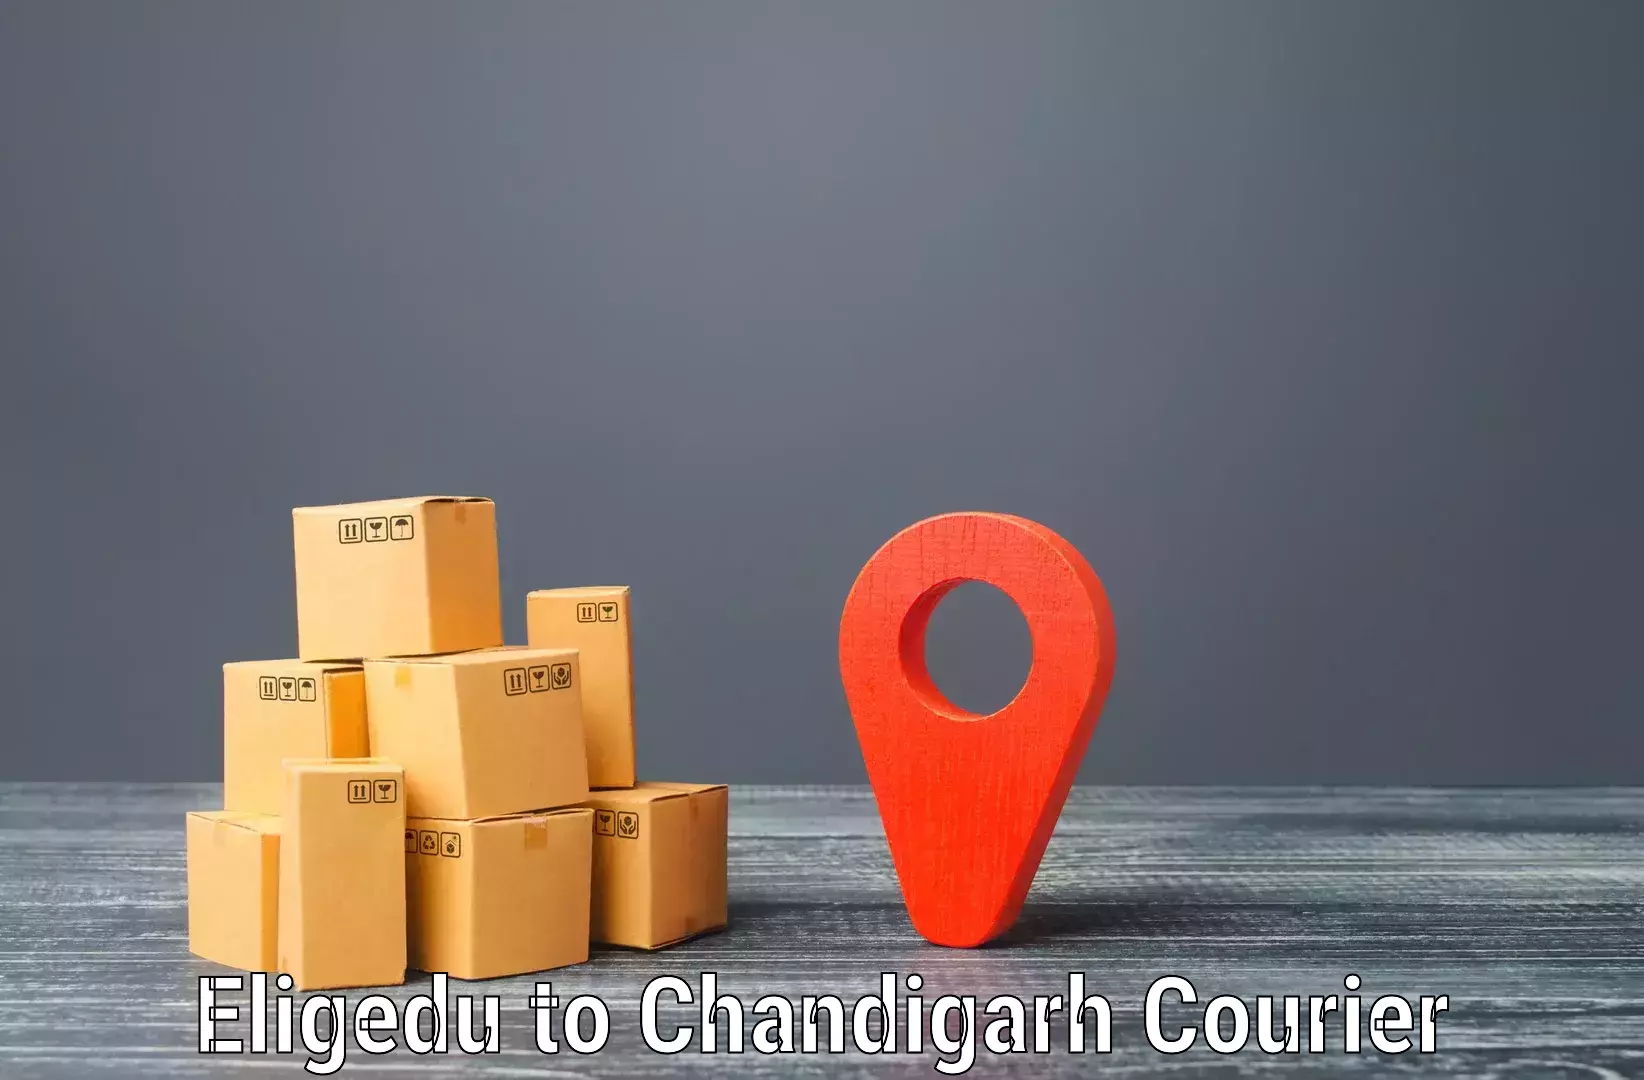 Nationwide parcel services Eligedu to Chandigarh